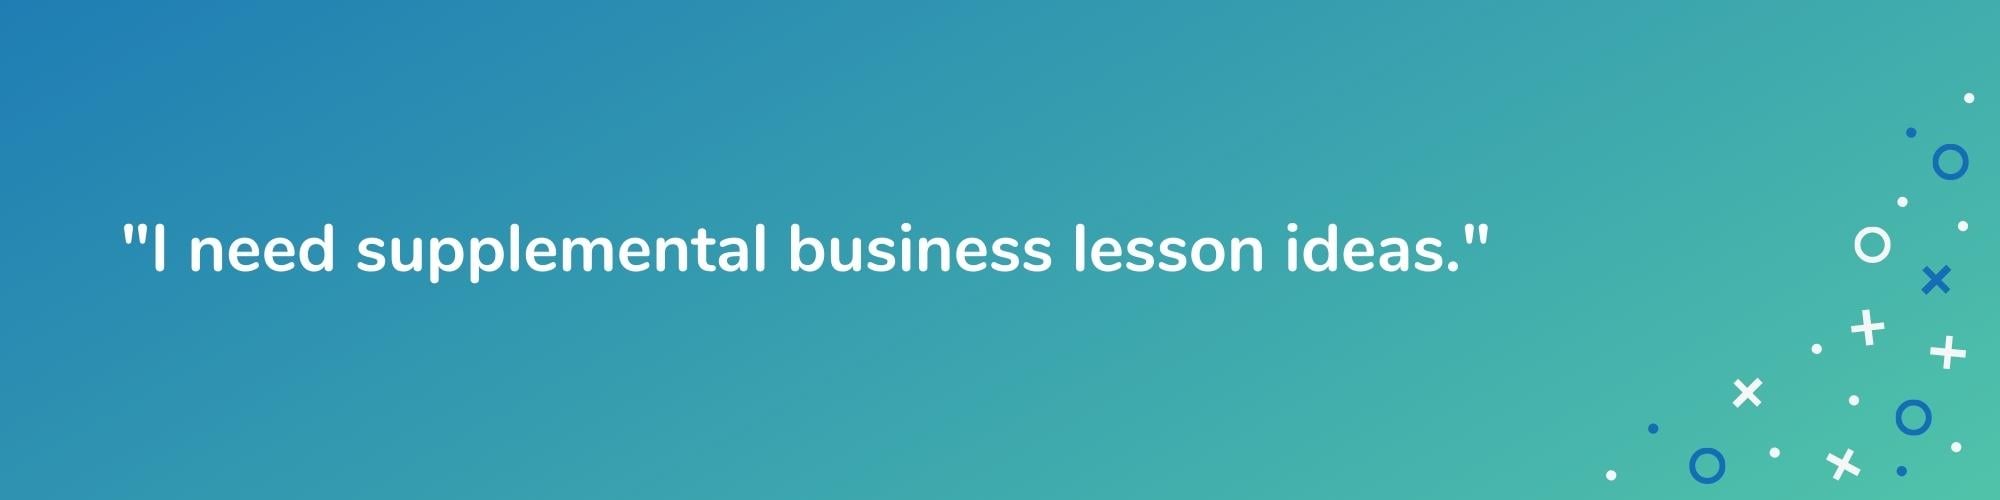 business-education-lesson-plans-curriculum